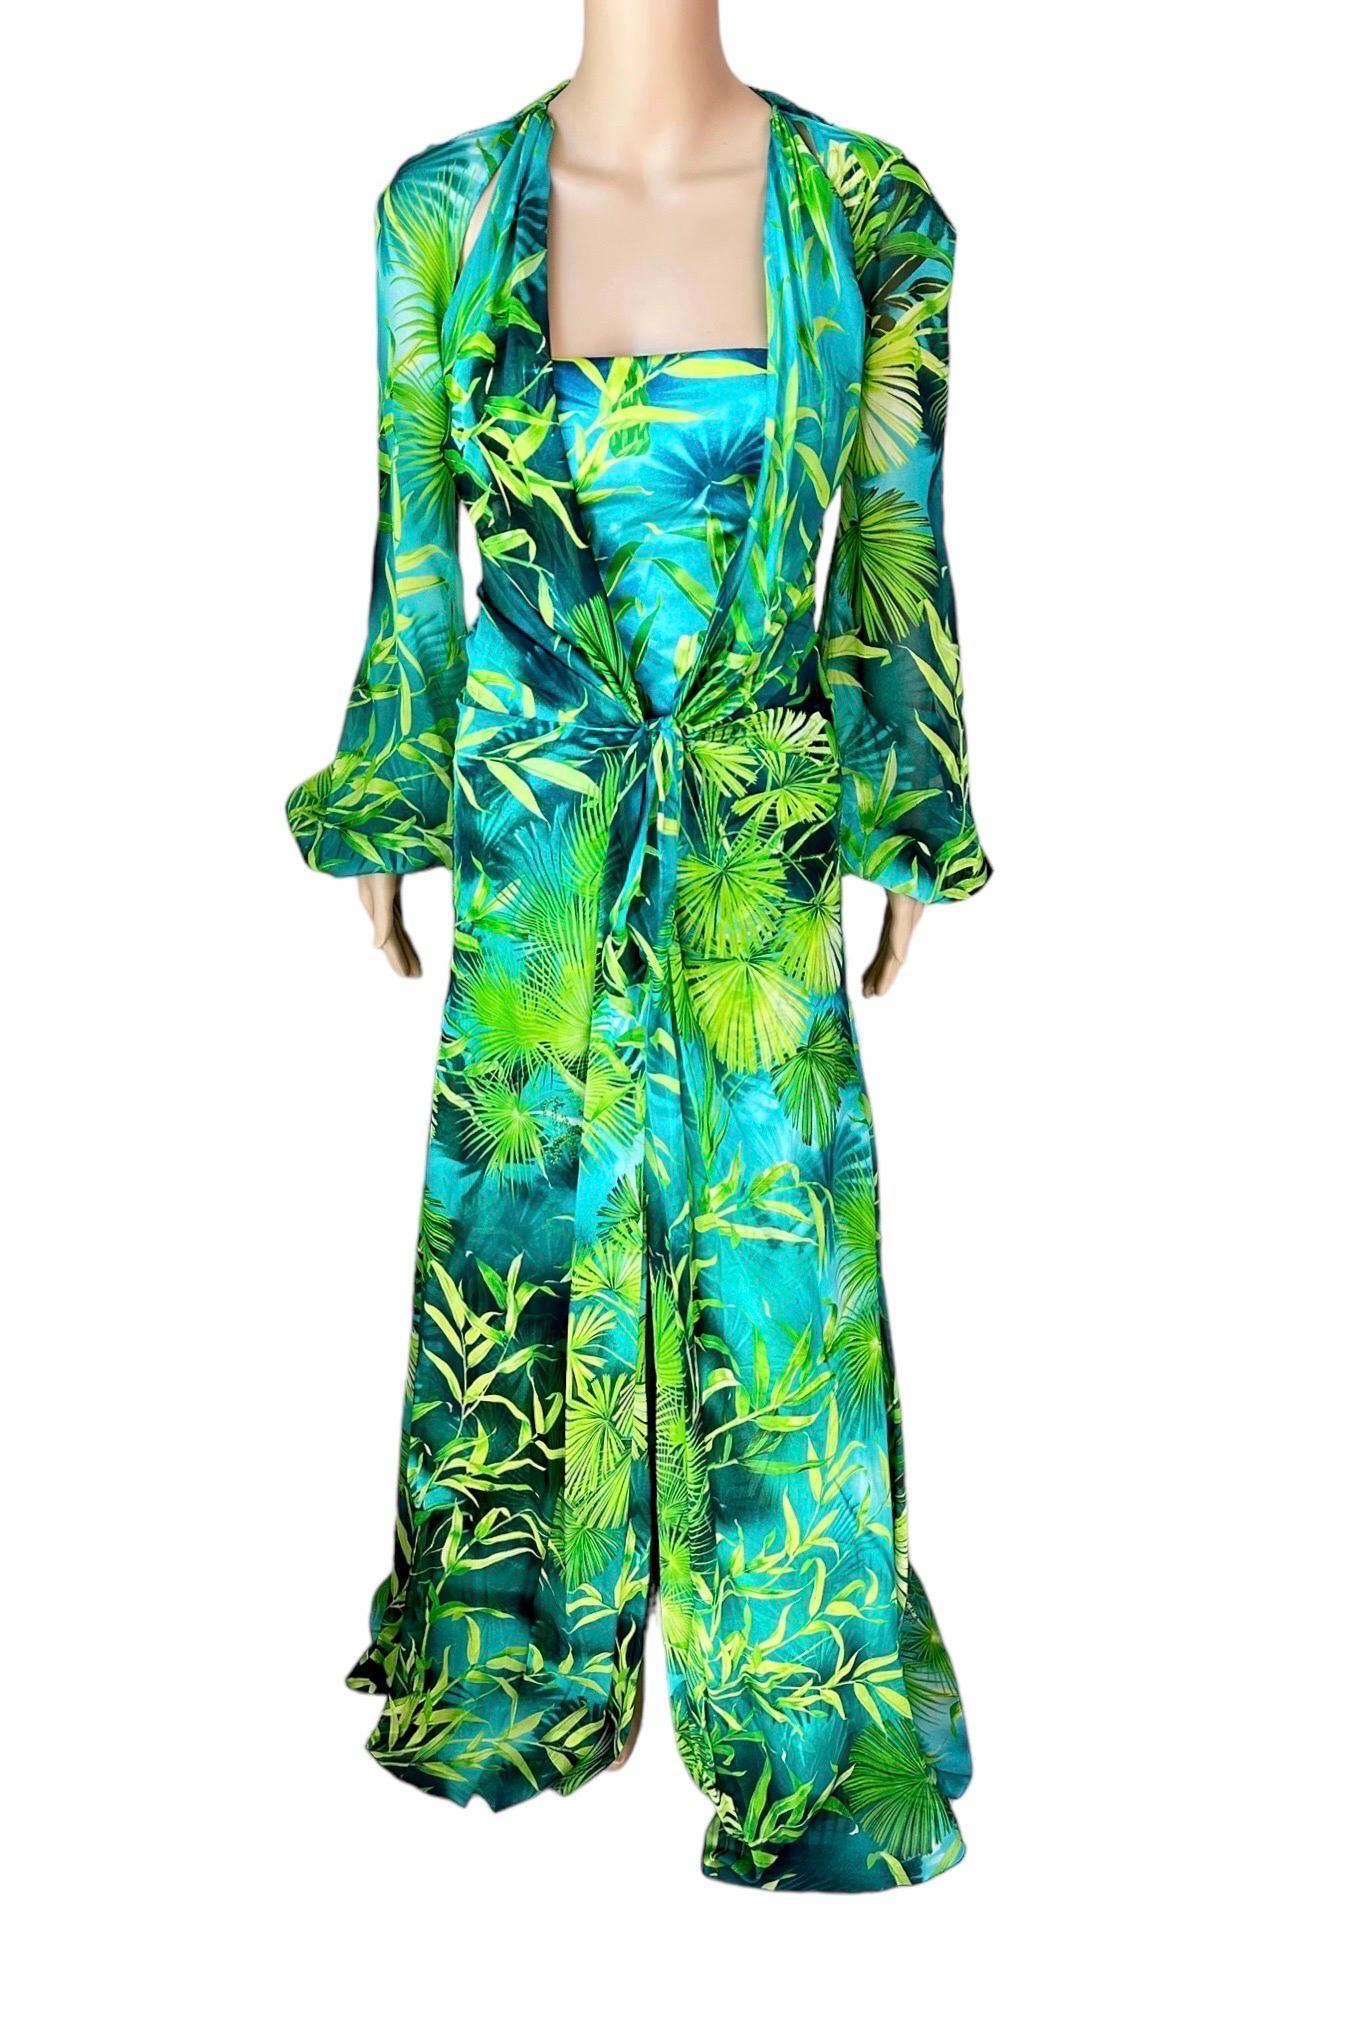 Versace S/S 2020 Plunging Jungle Print Bodysuit & Evening Dress Gown Set 5